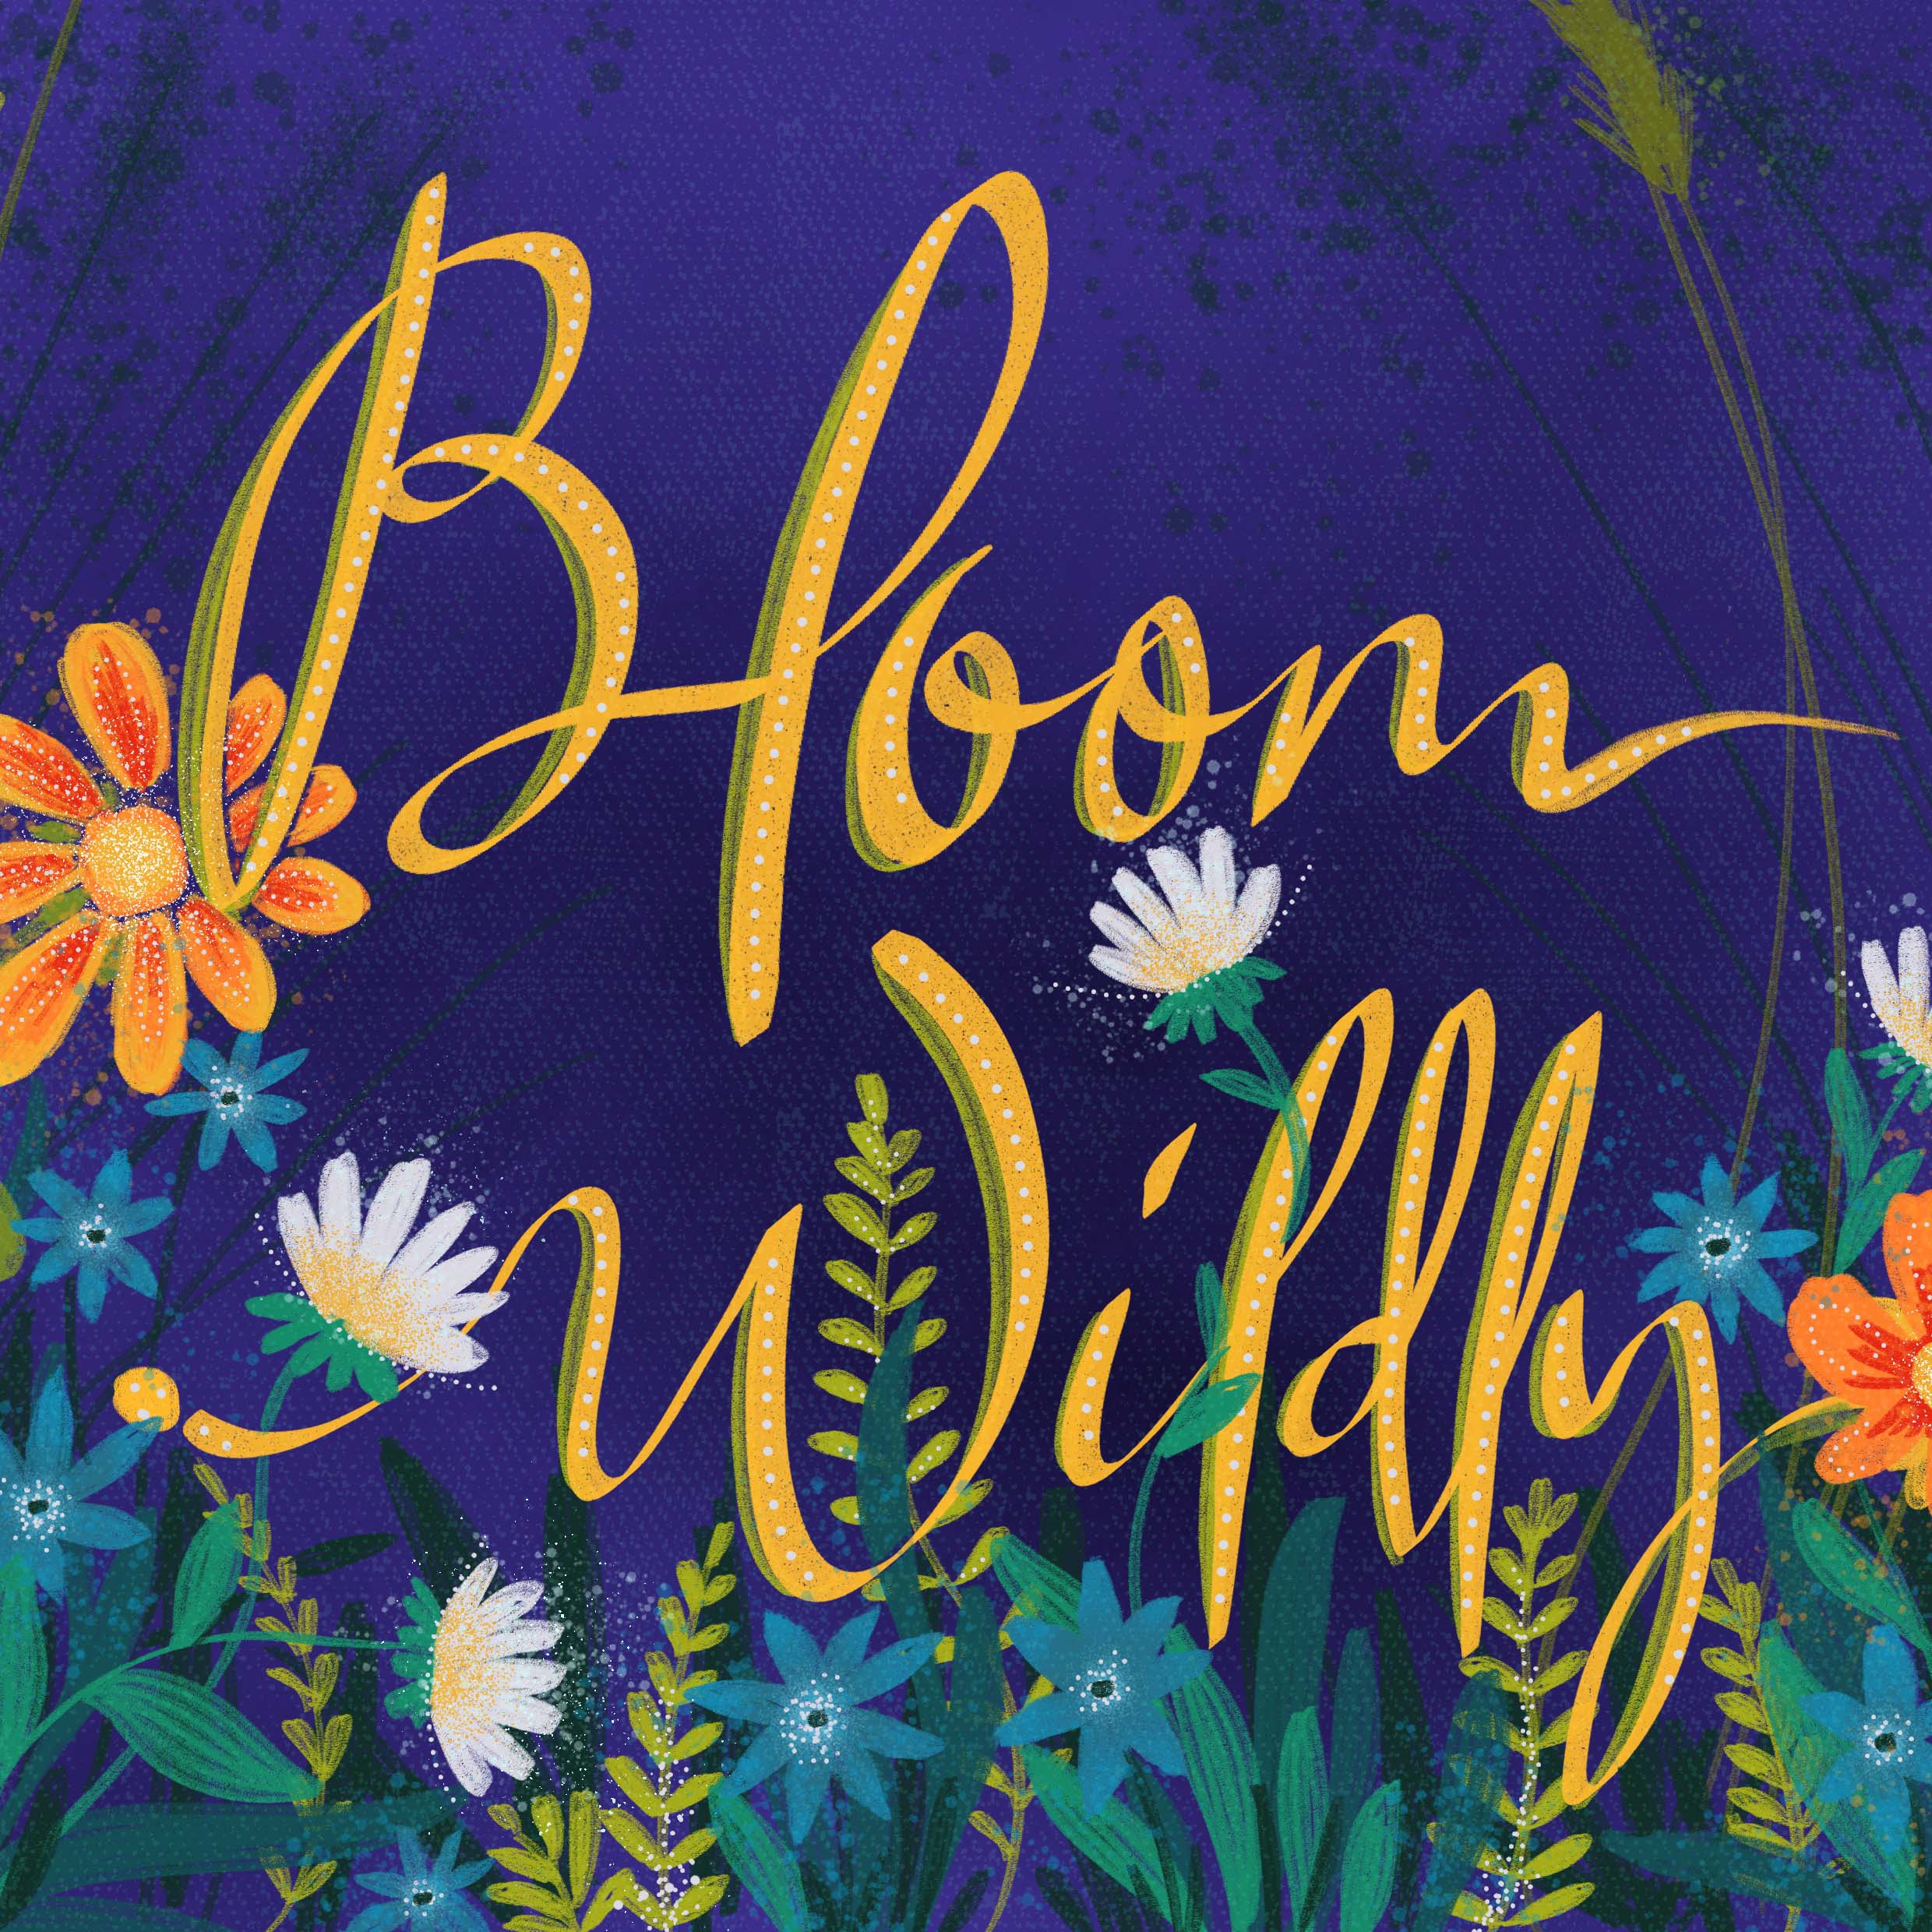 Bloom Wildly – Floral illustration series